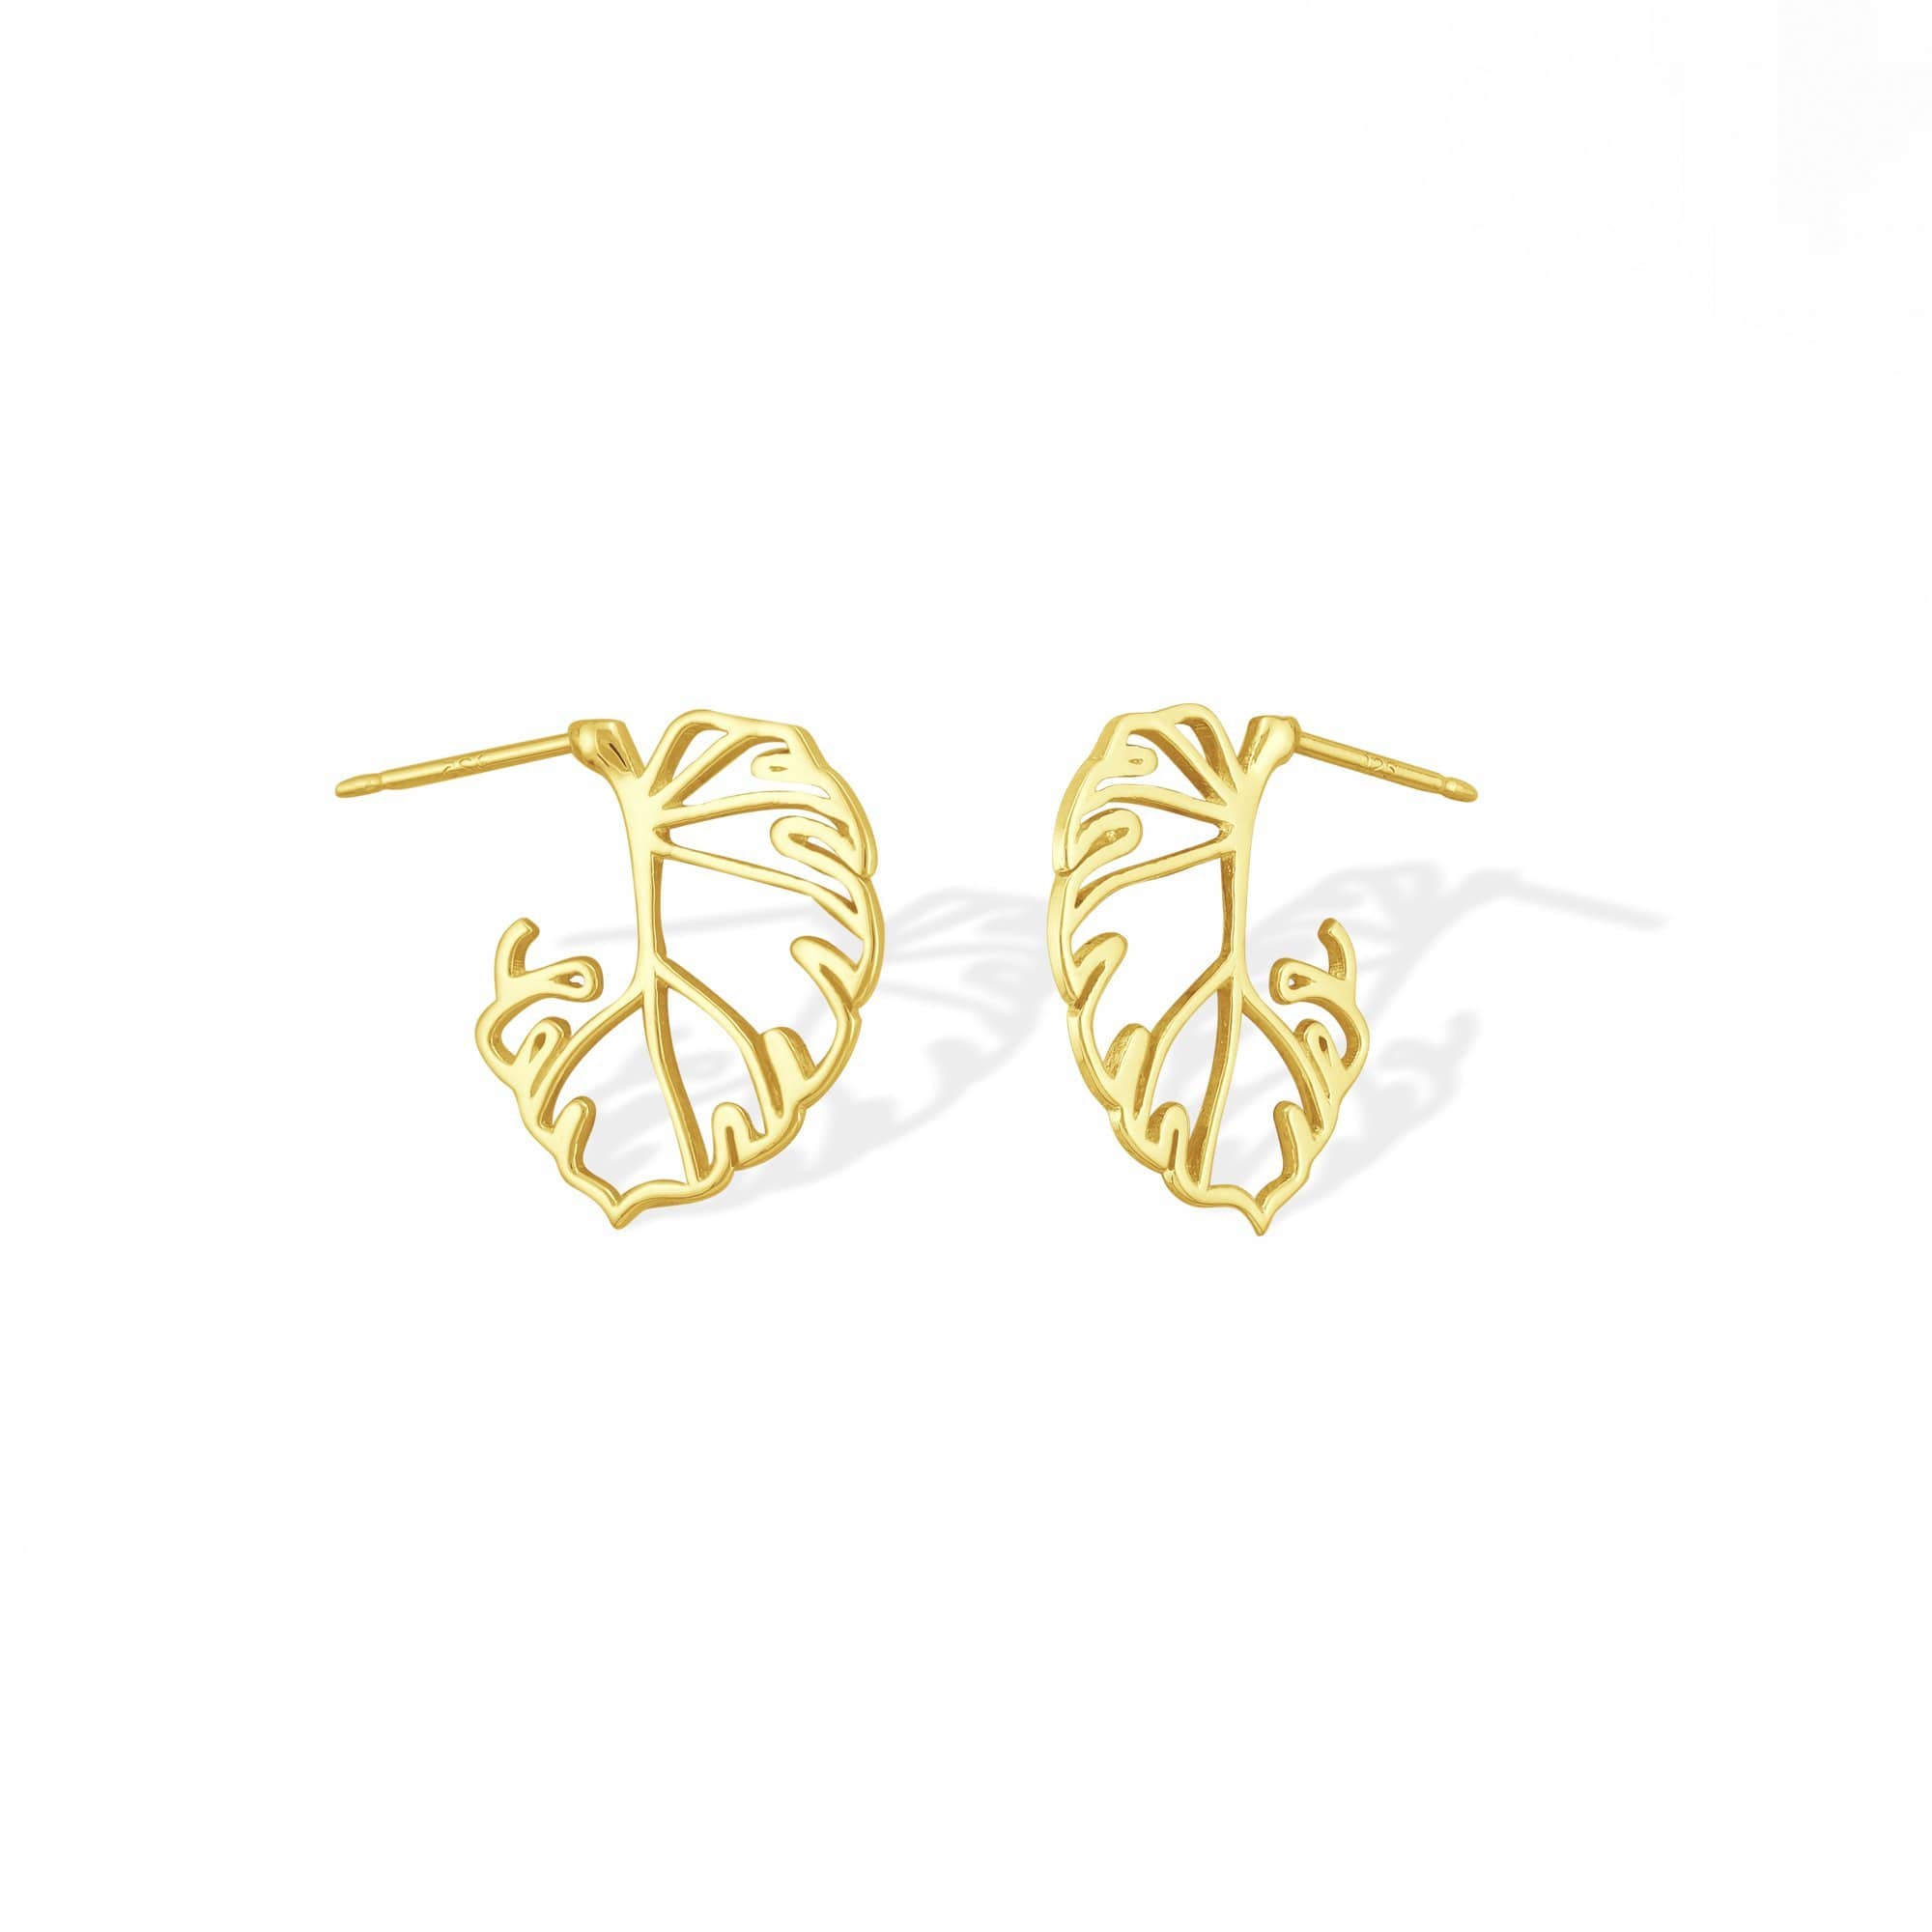 Boma Jewelry Earrings 14K Gold Plated Monstera Leaf Earrings